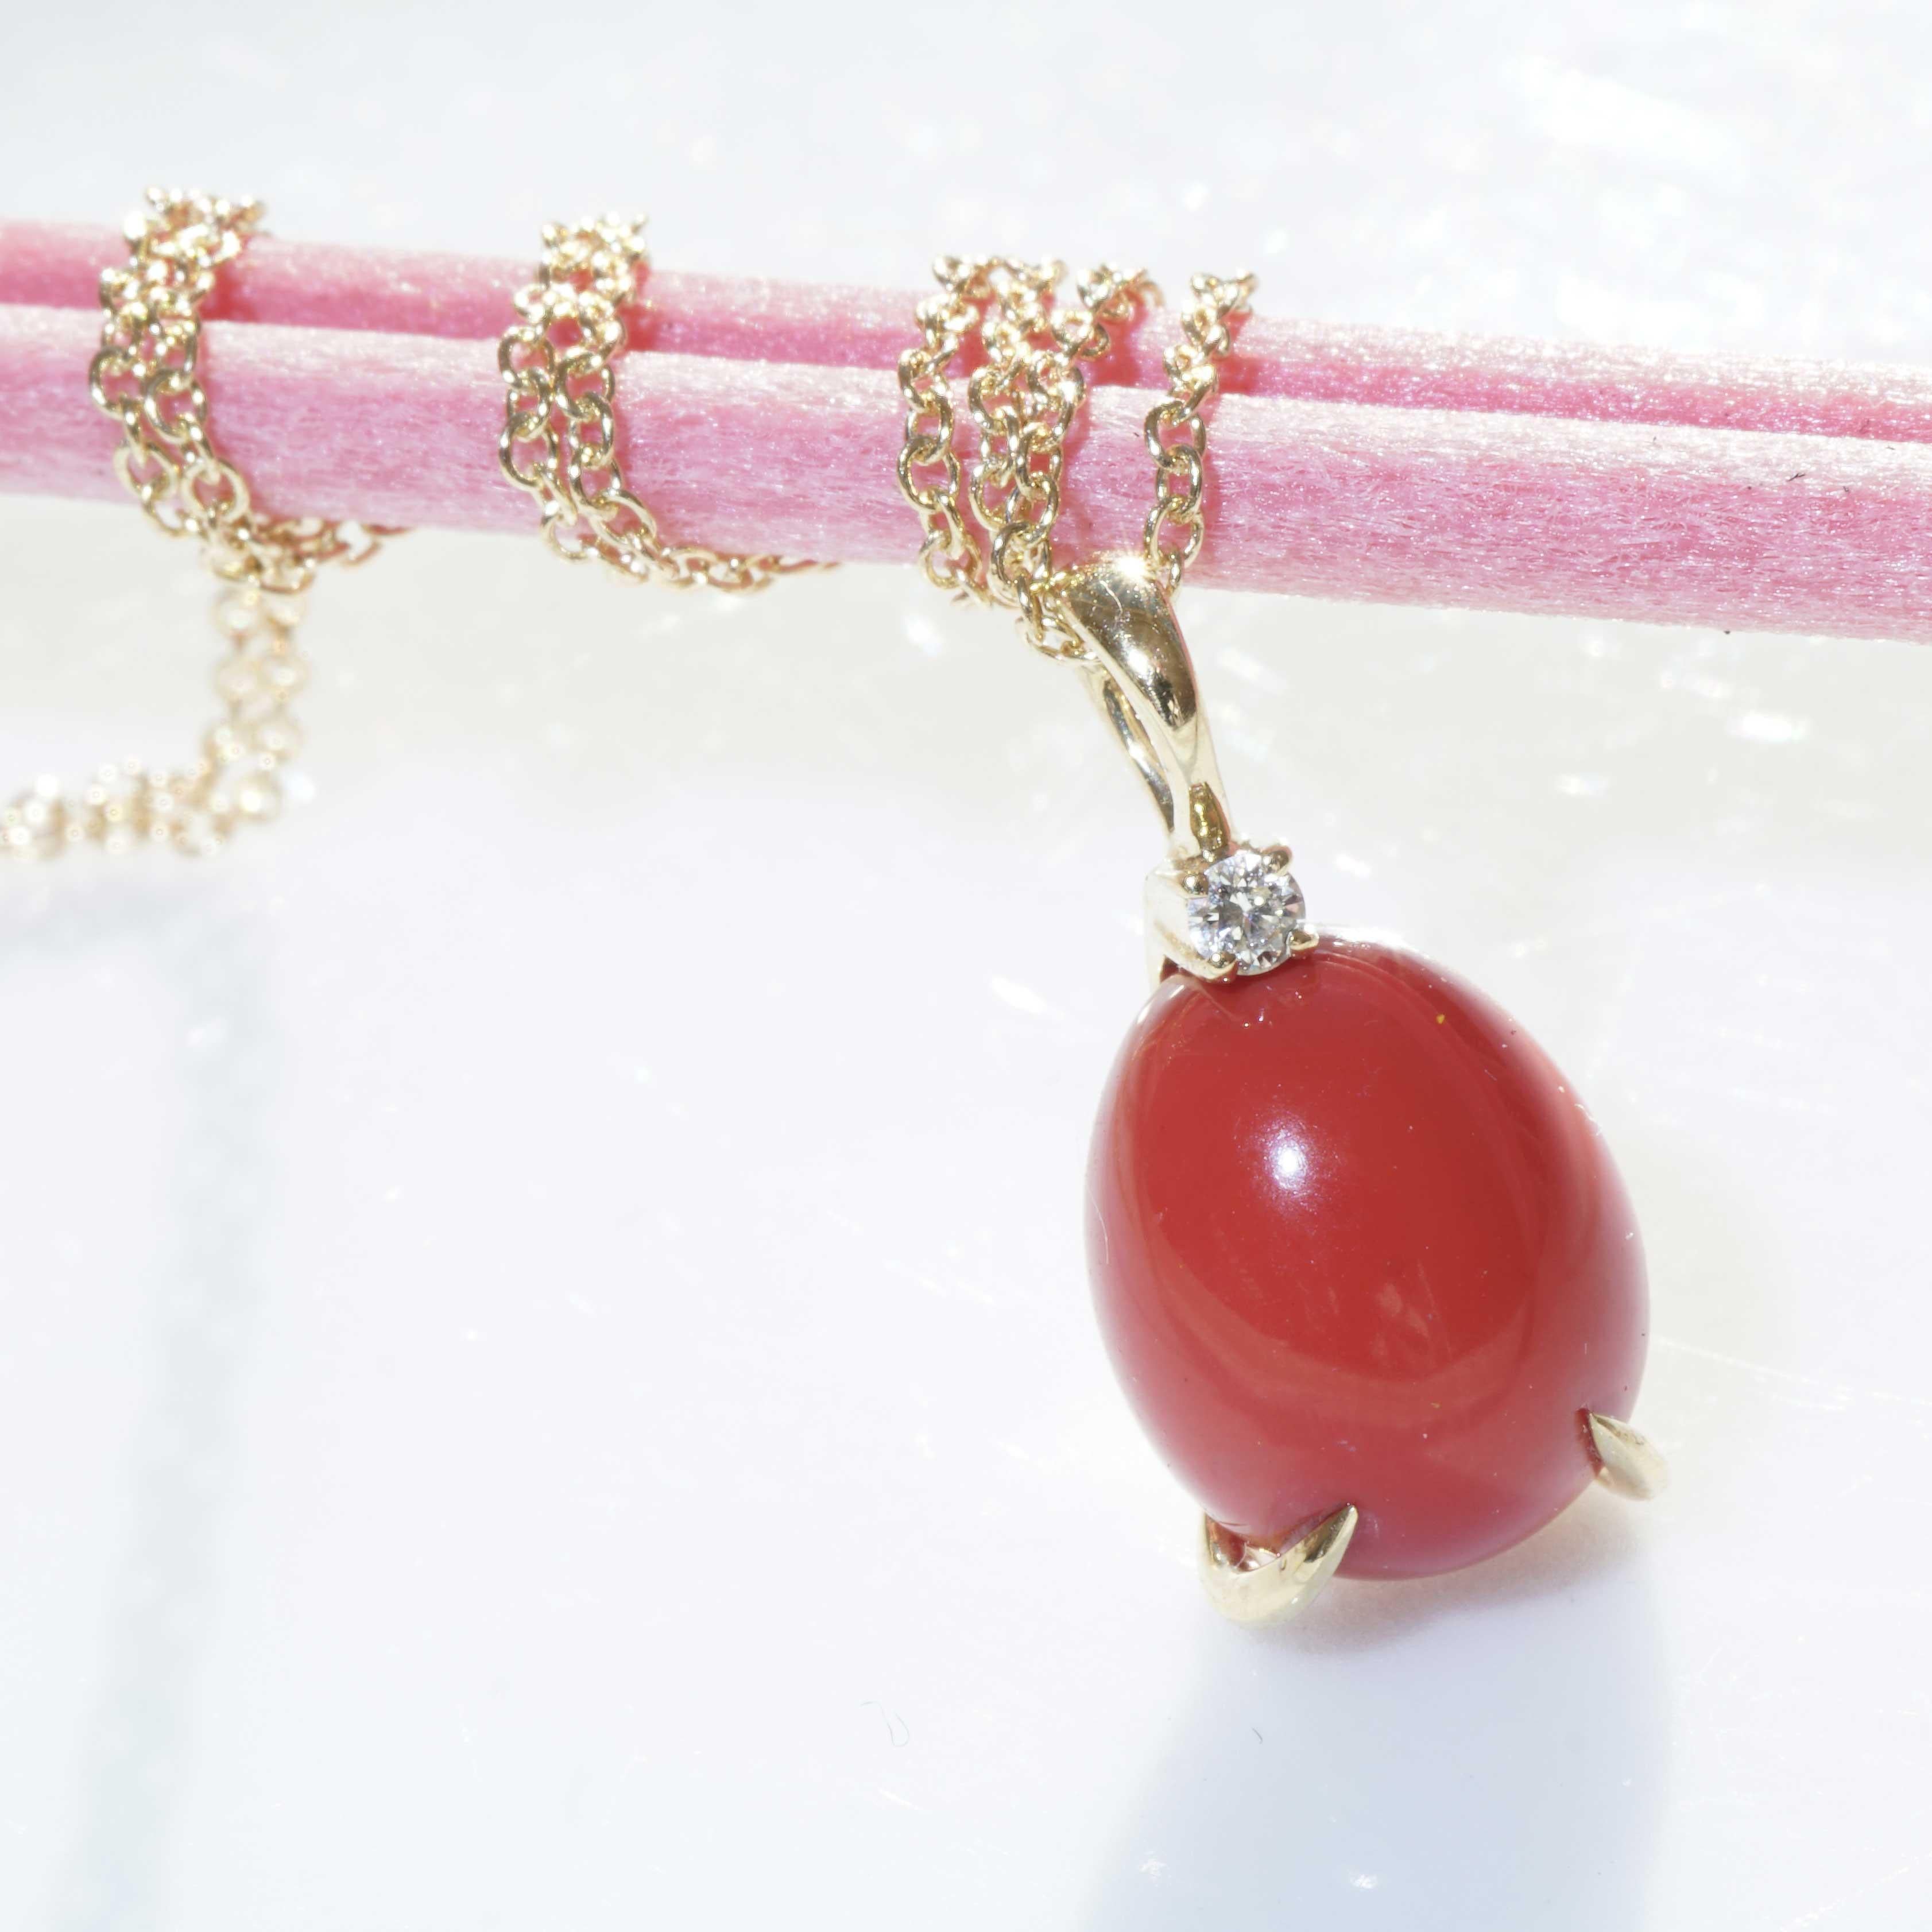 Taille brillant Corail rouge Cabochon Brilliante pendentif avec chaîne soooo sweet made in Italy  en vente